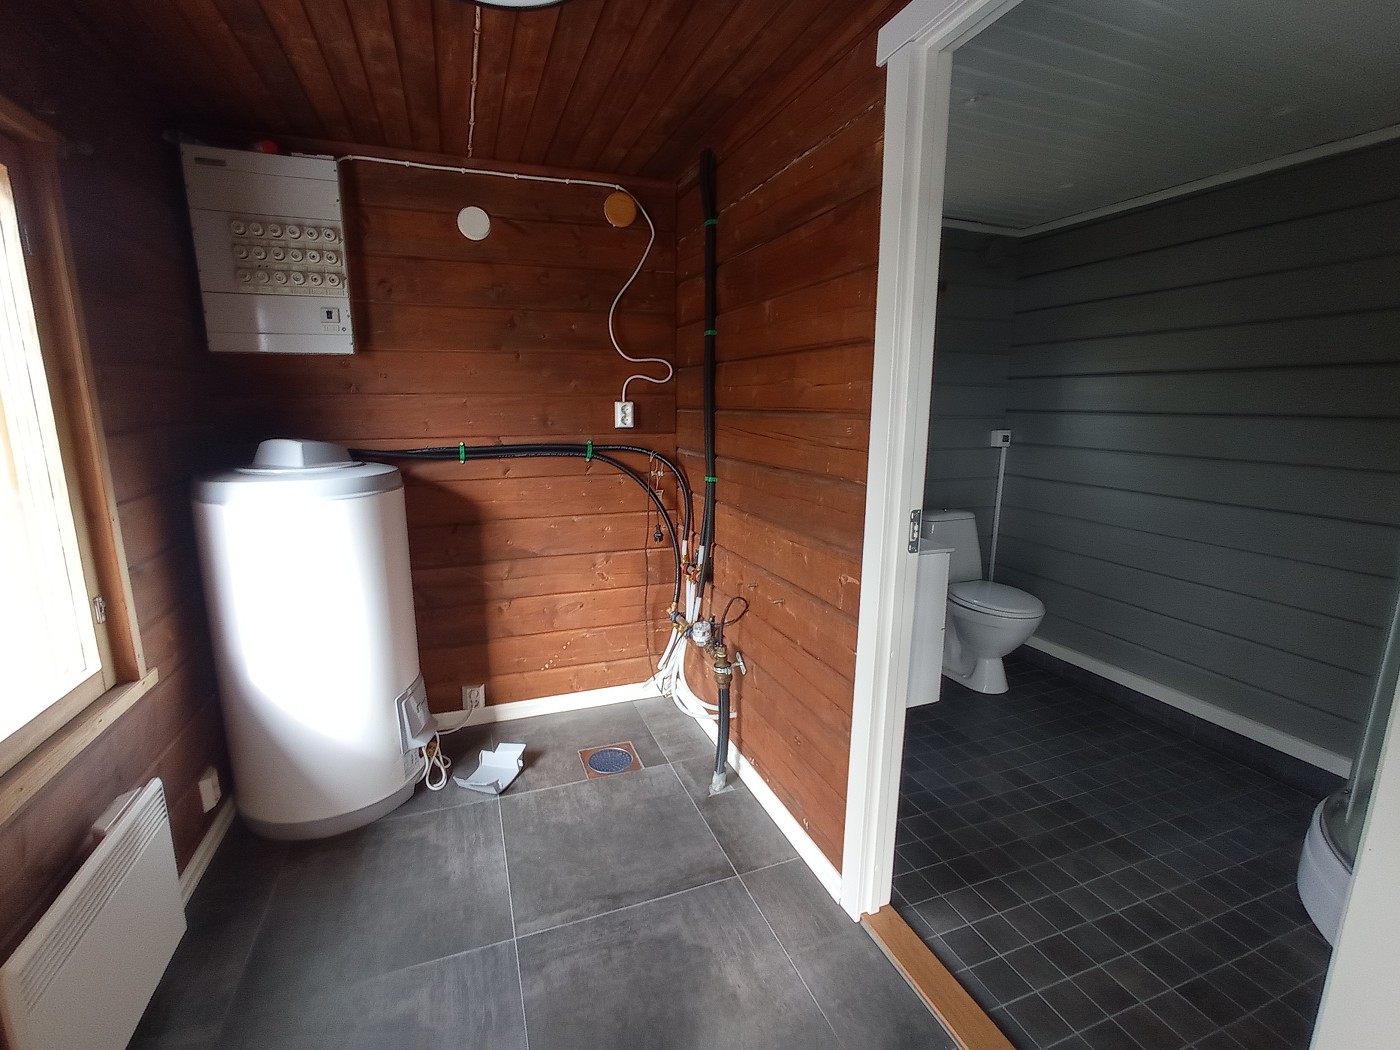 hot water Kilpis Finland Lapland bathroom shower toilet